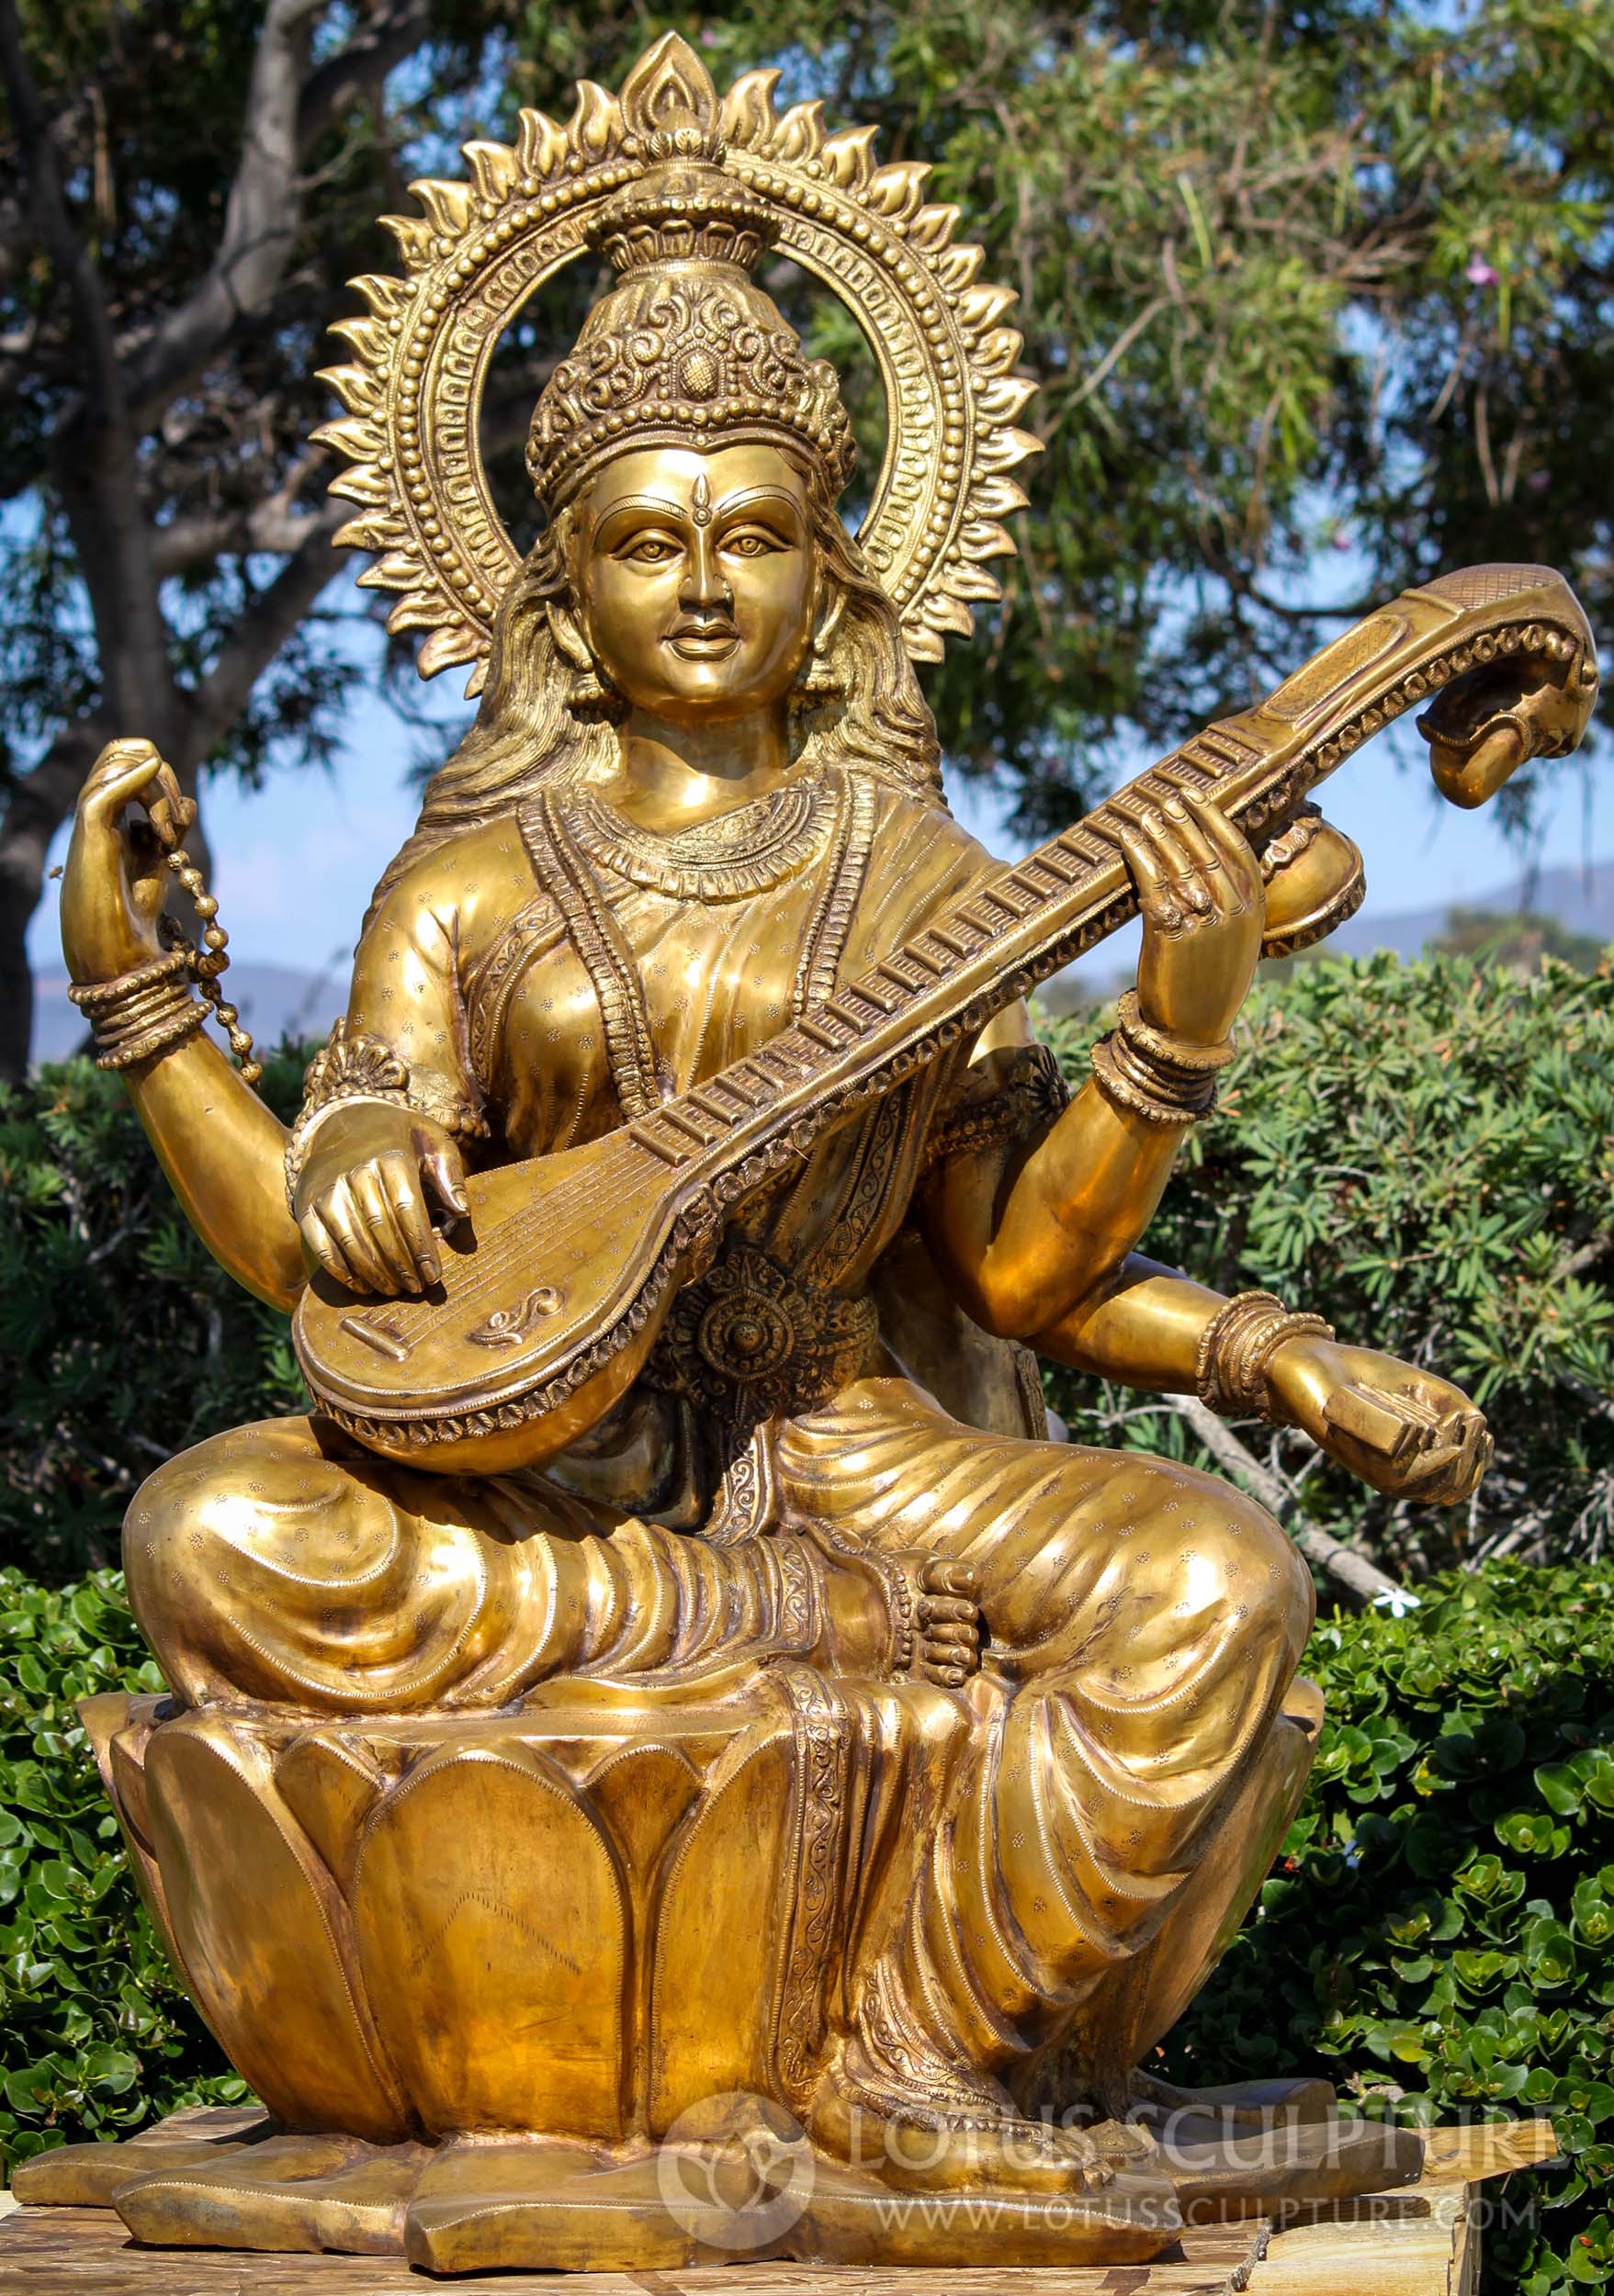 https://www.lotussculpture.com/mm5/graphics/00000001/50/1-large-golden-brass-hindu-goddess-of-wisdom-saraswati-statue-with-veena-on-lotus-flower-c.jpg